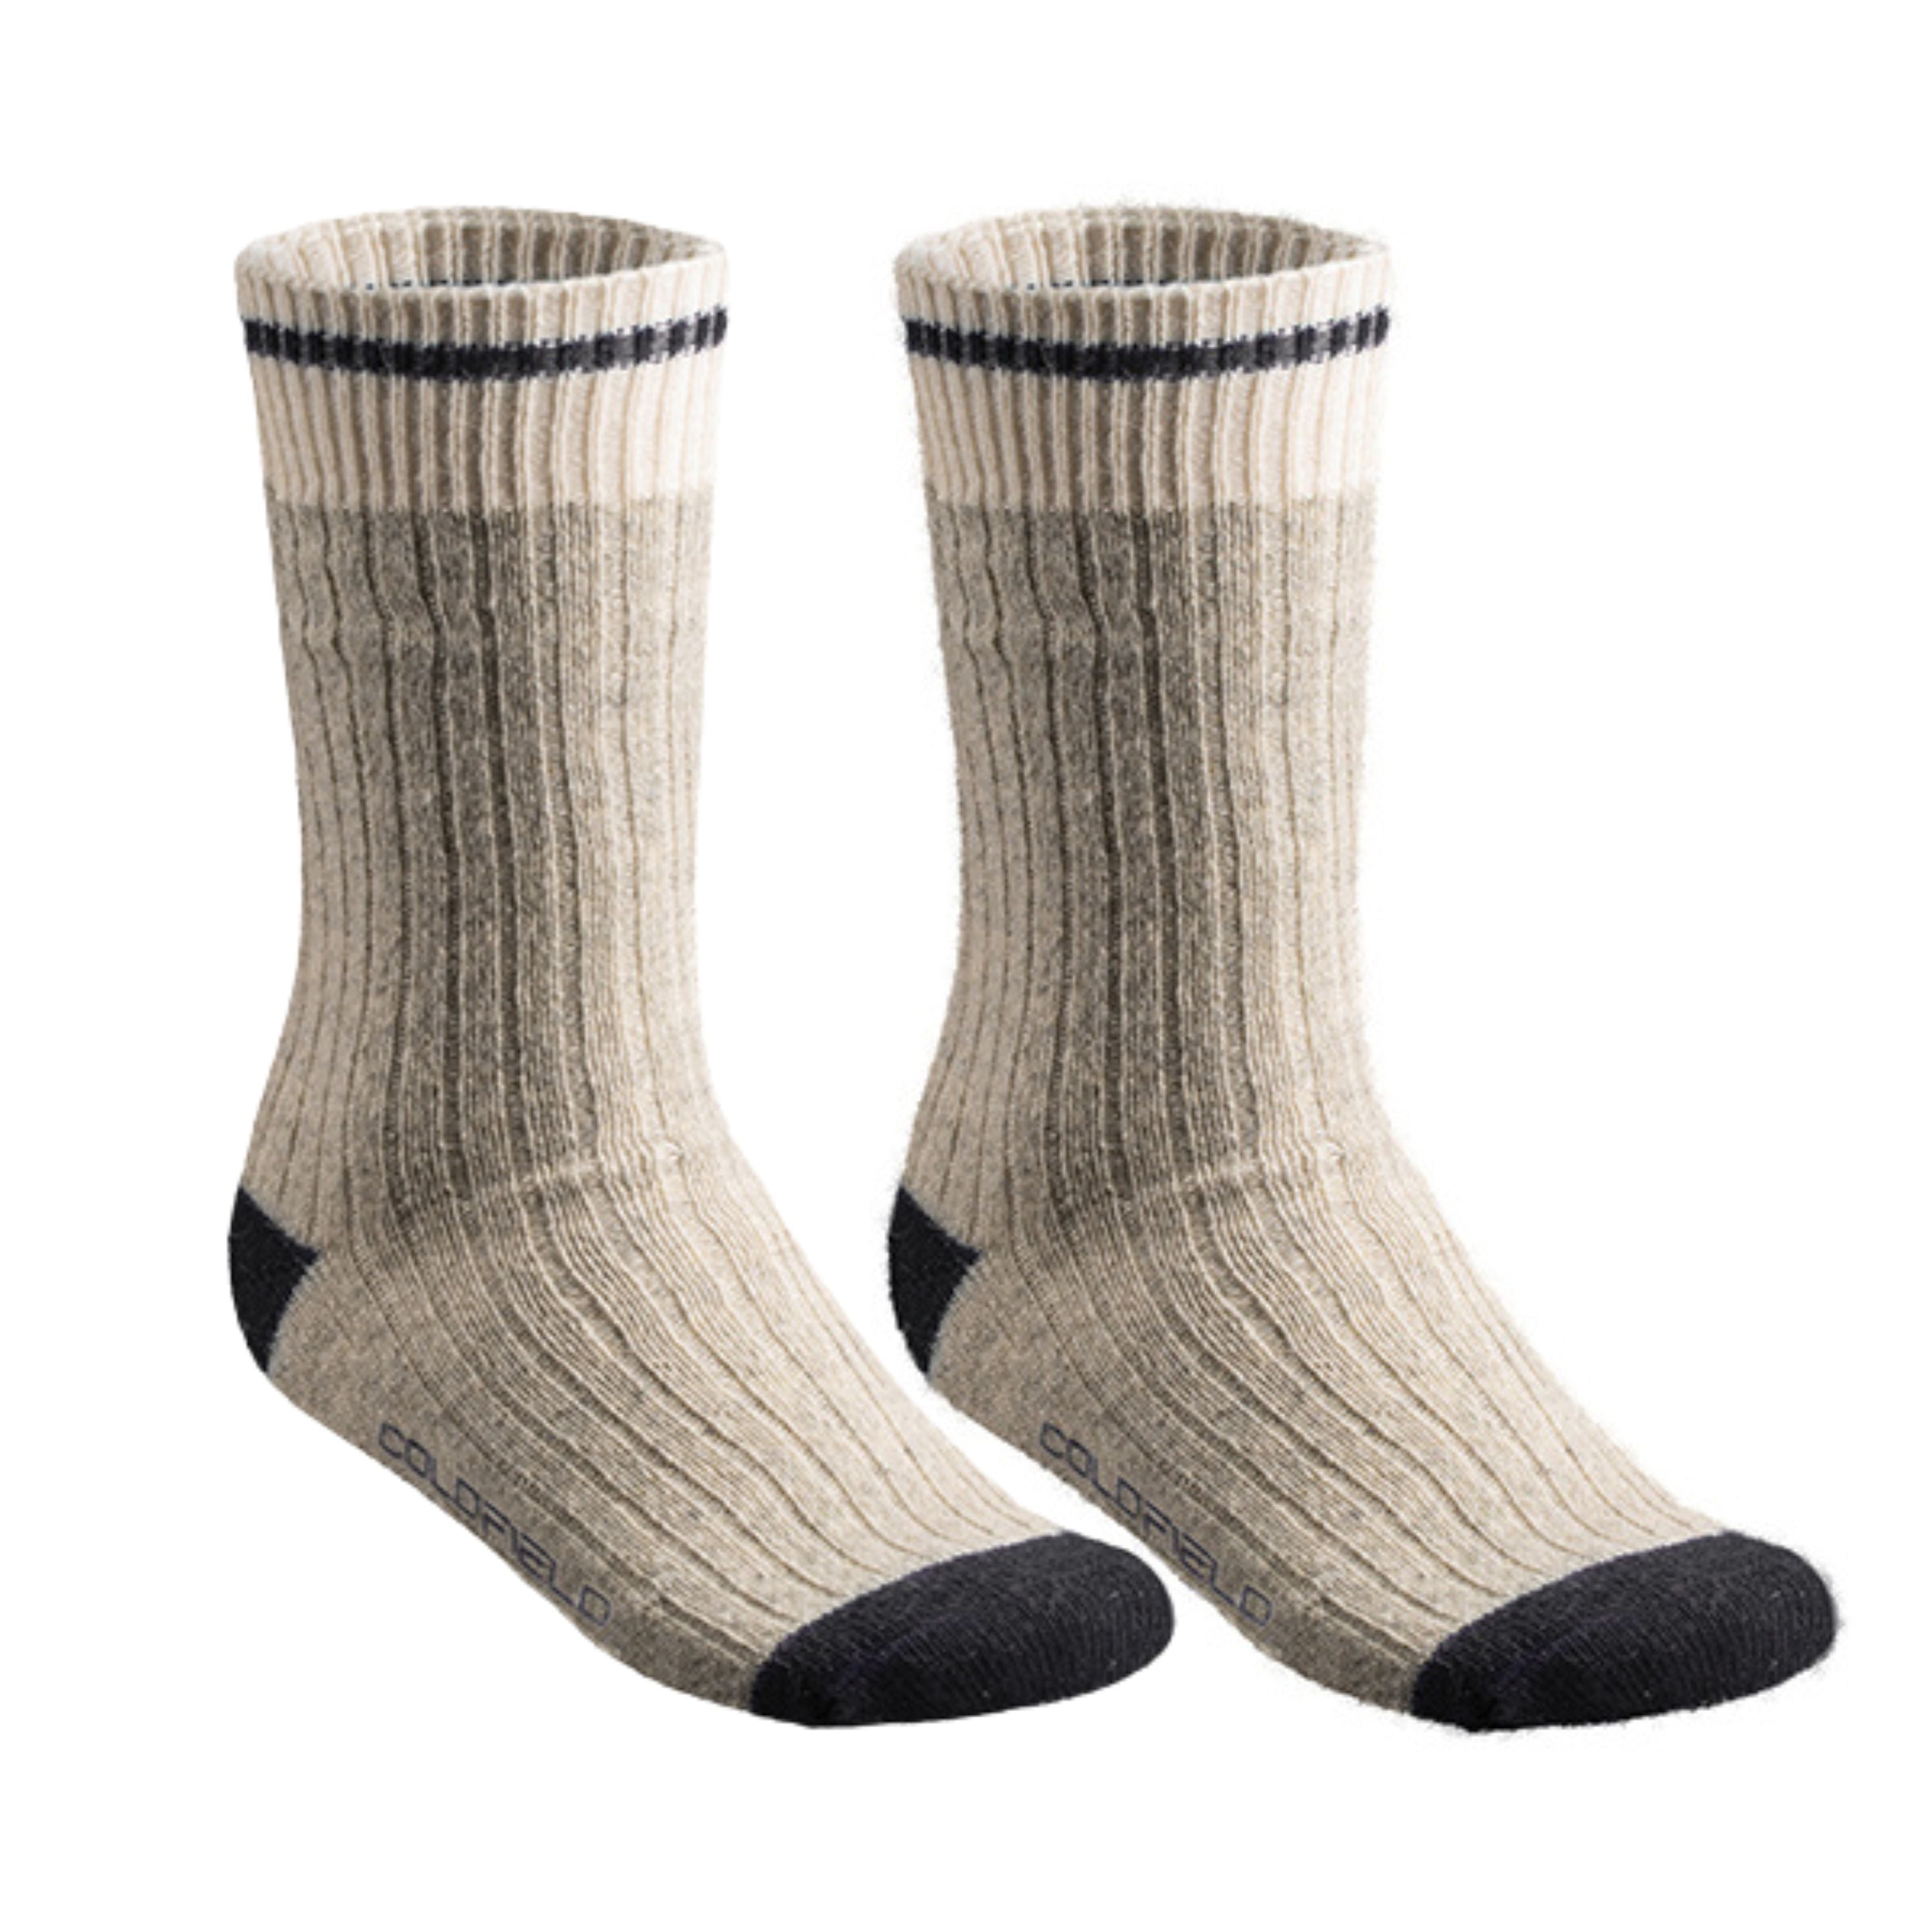 Merino wool socks with stripes - Unisex